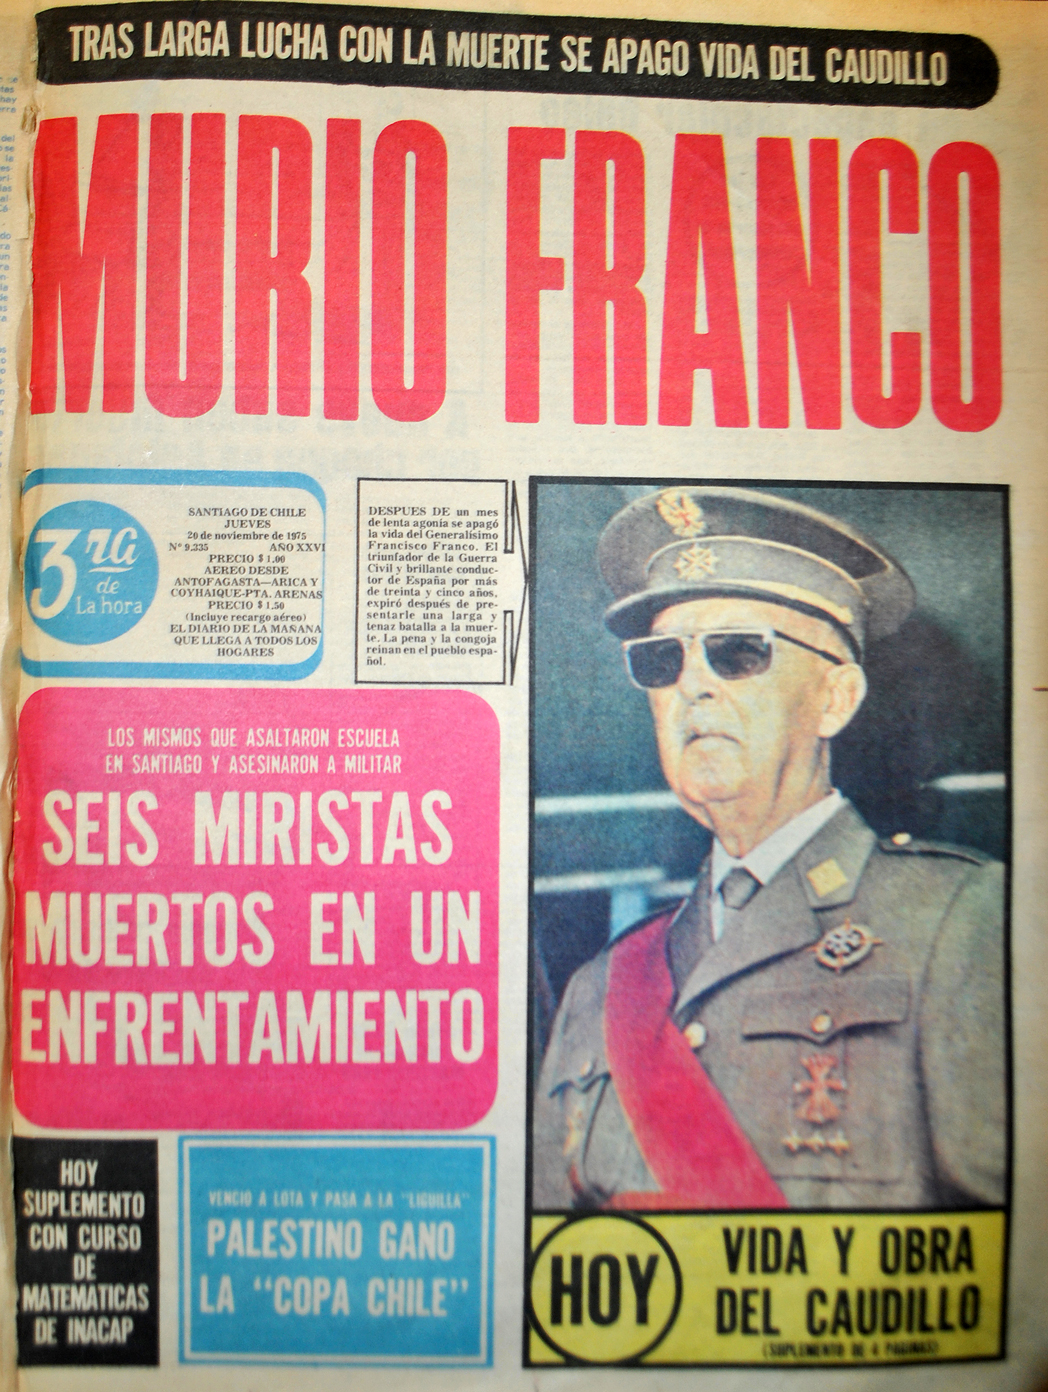 Portada de "La Tercera de la hora", del 20 de noviembre de 1975. | www.labatalla.cl